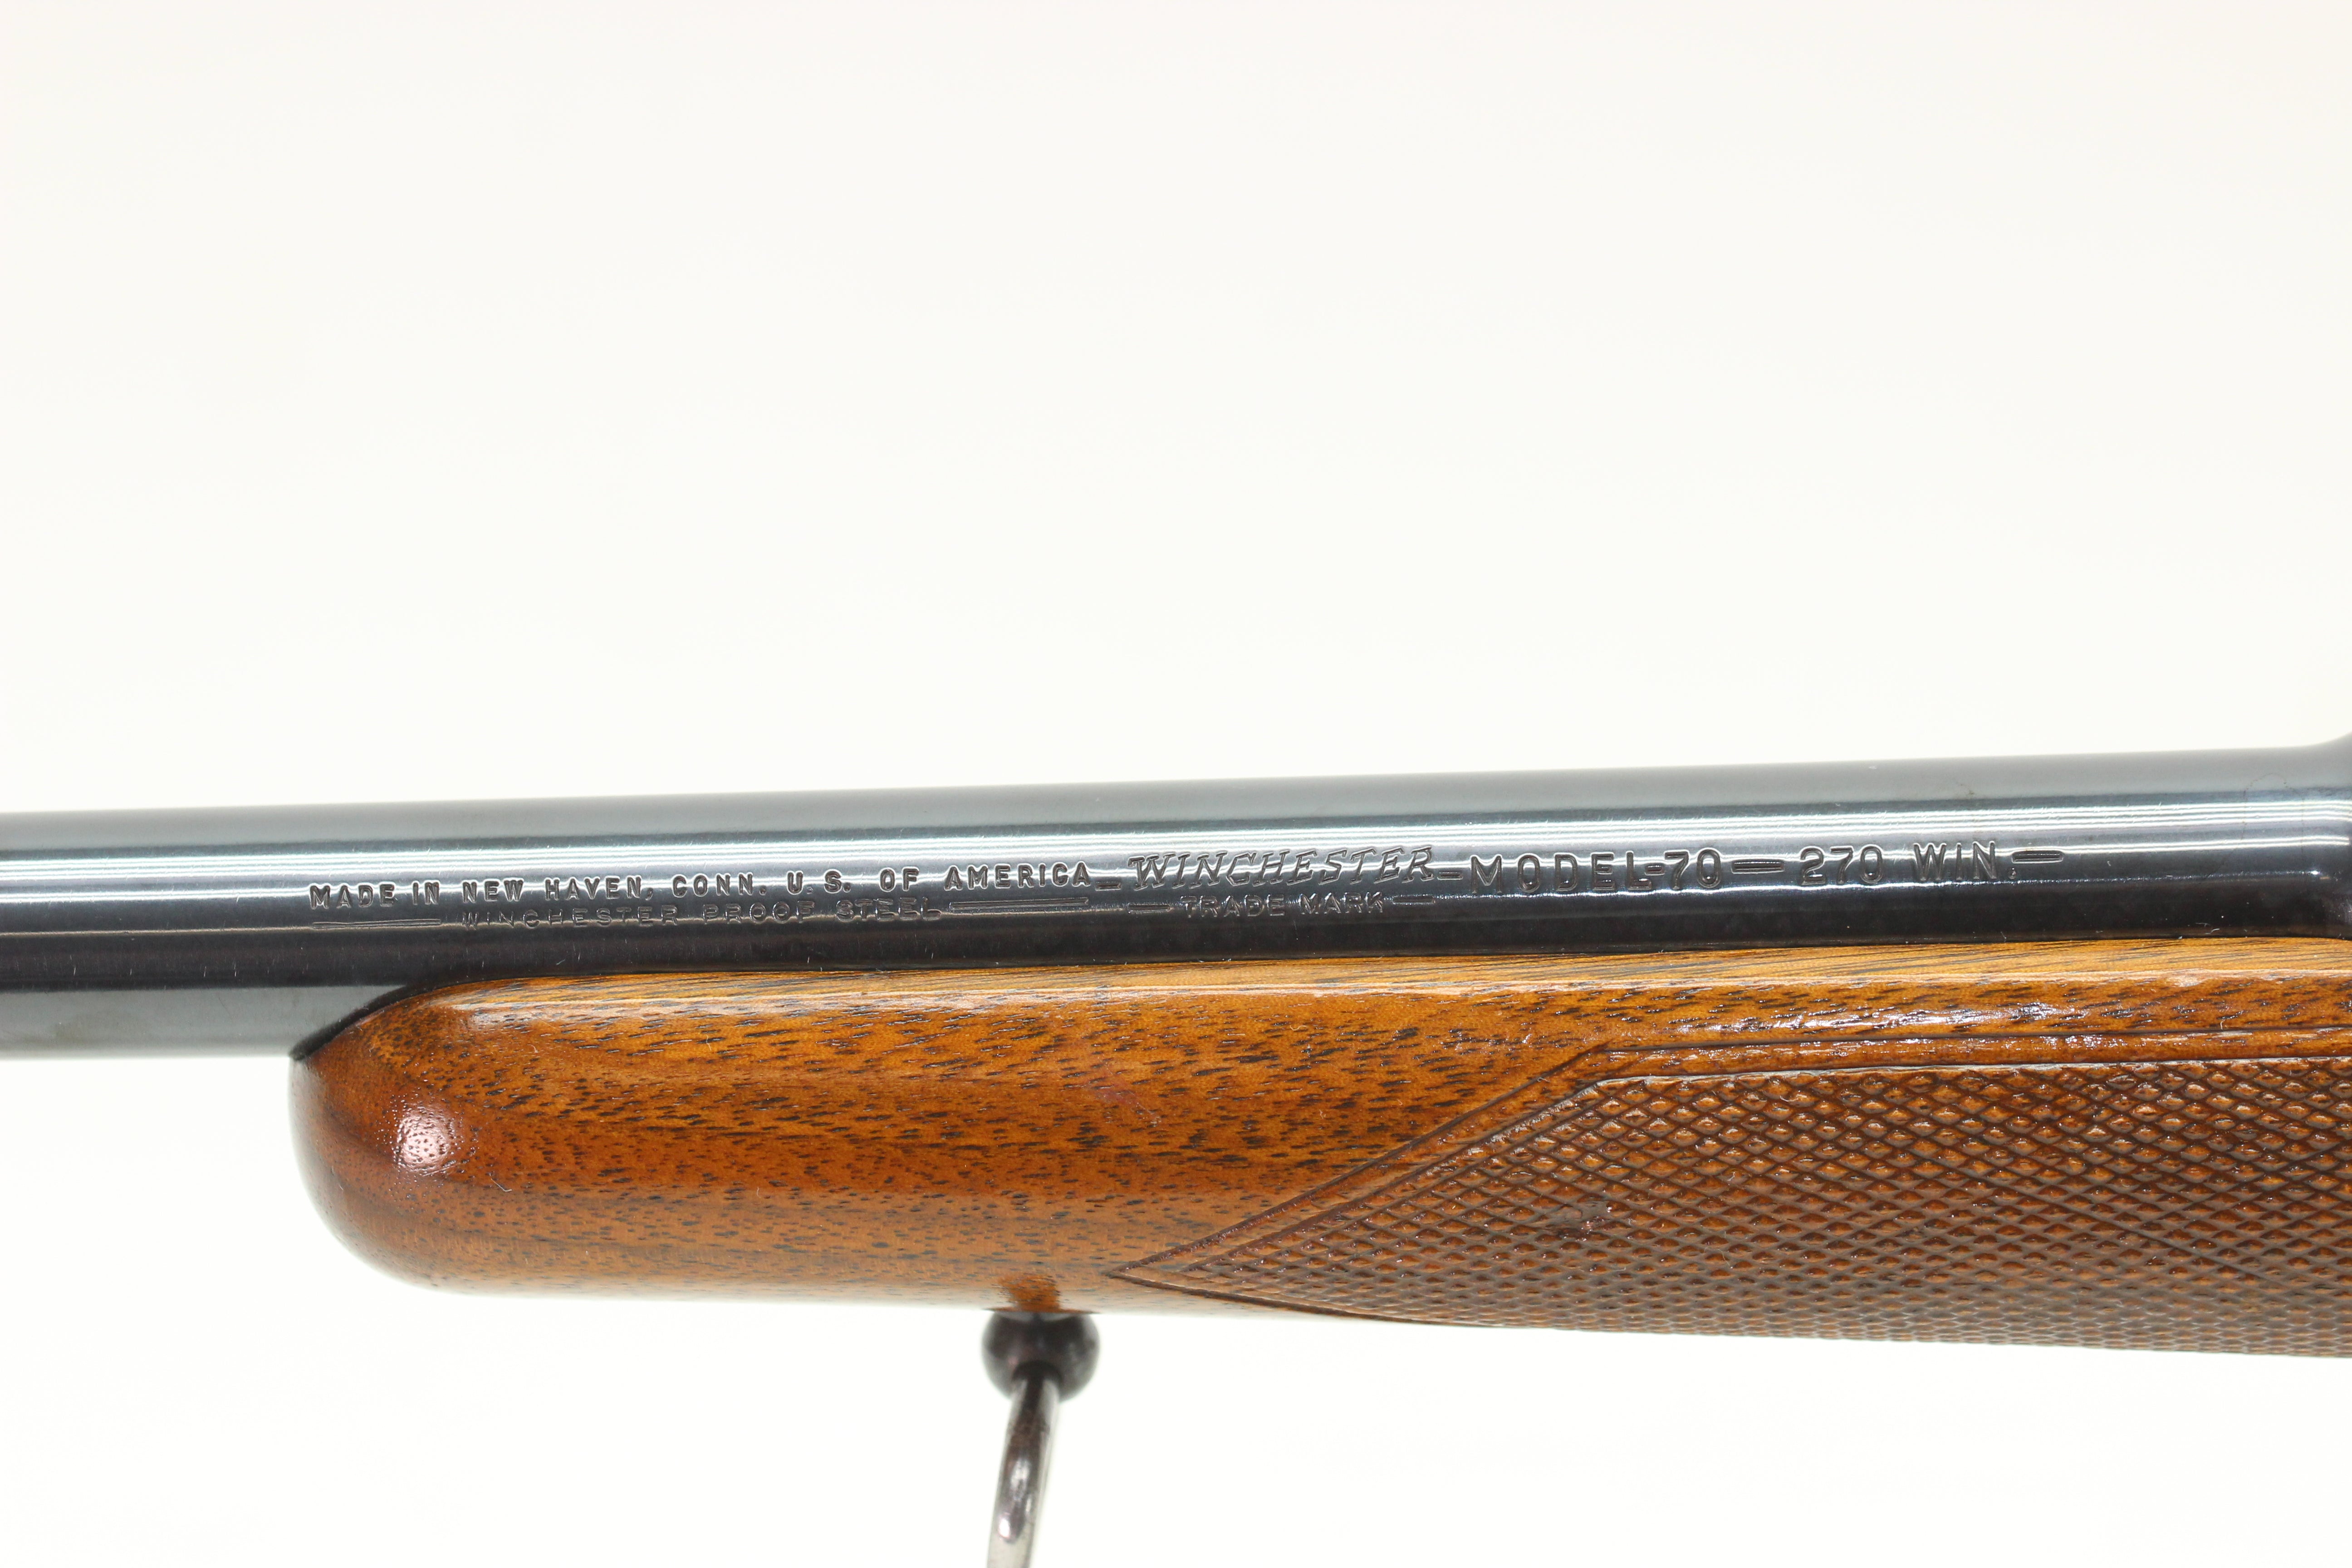 .270 Win Standard Rifle - 1952